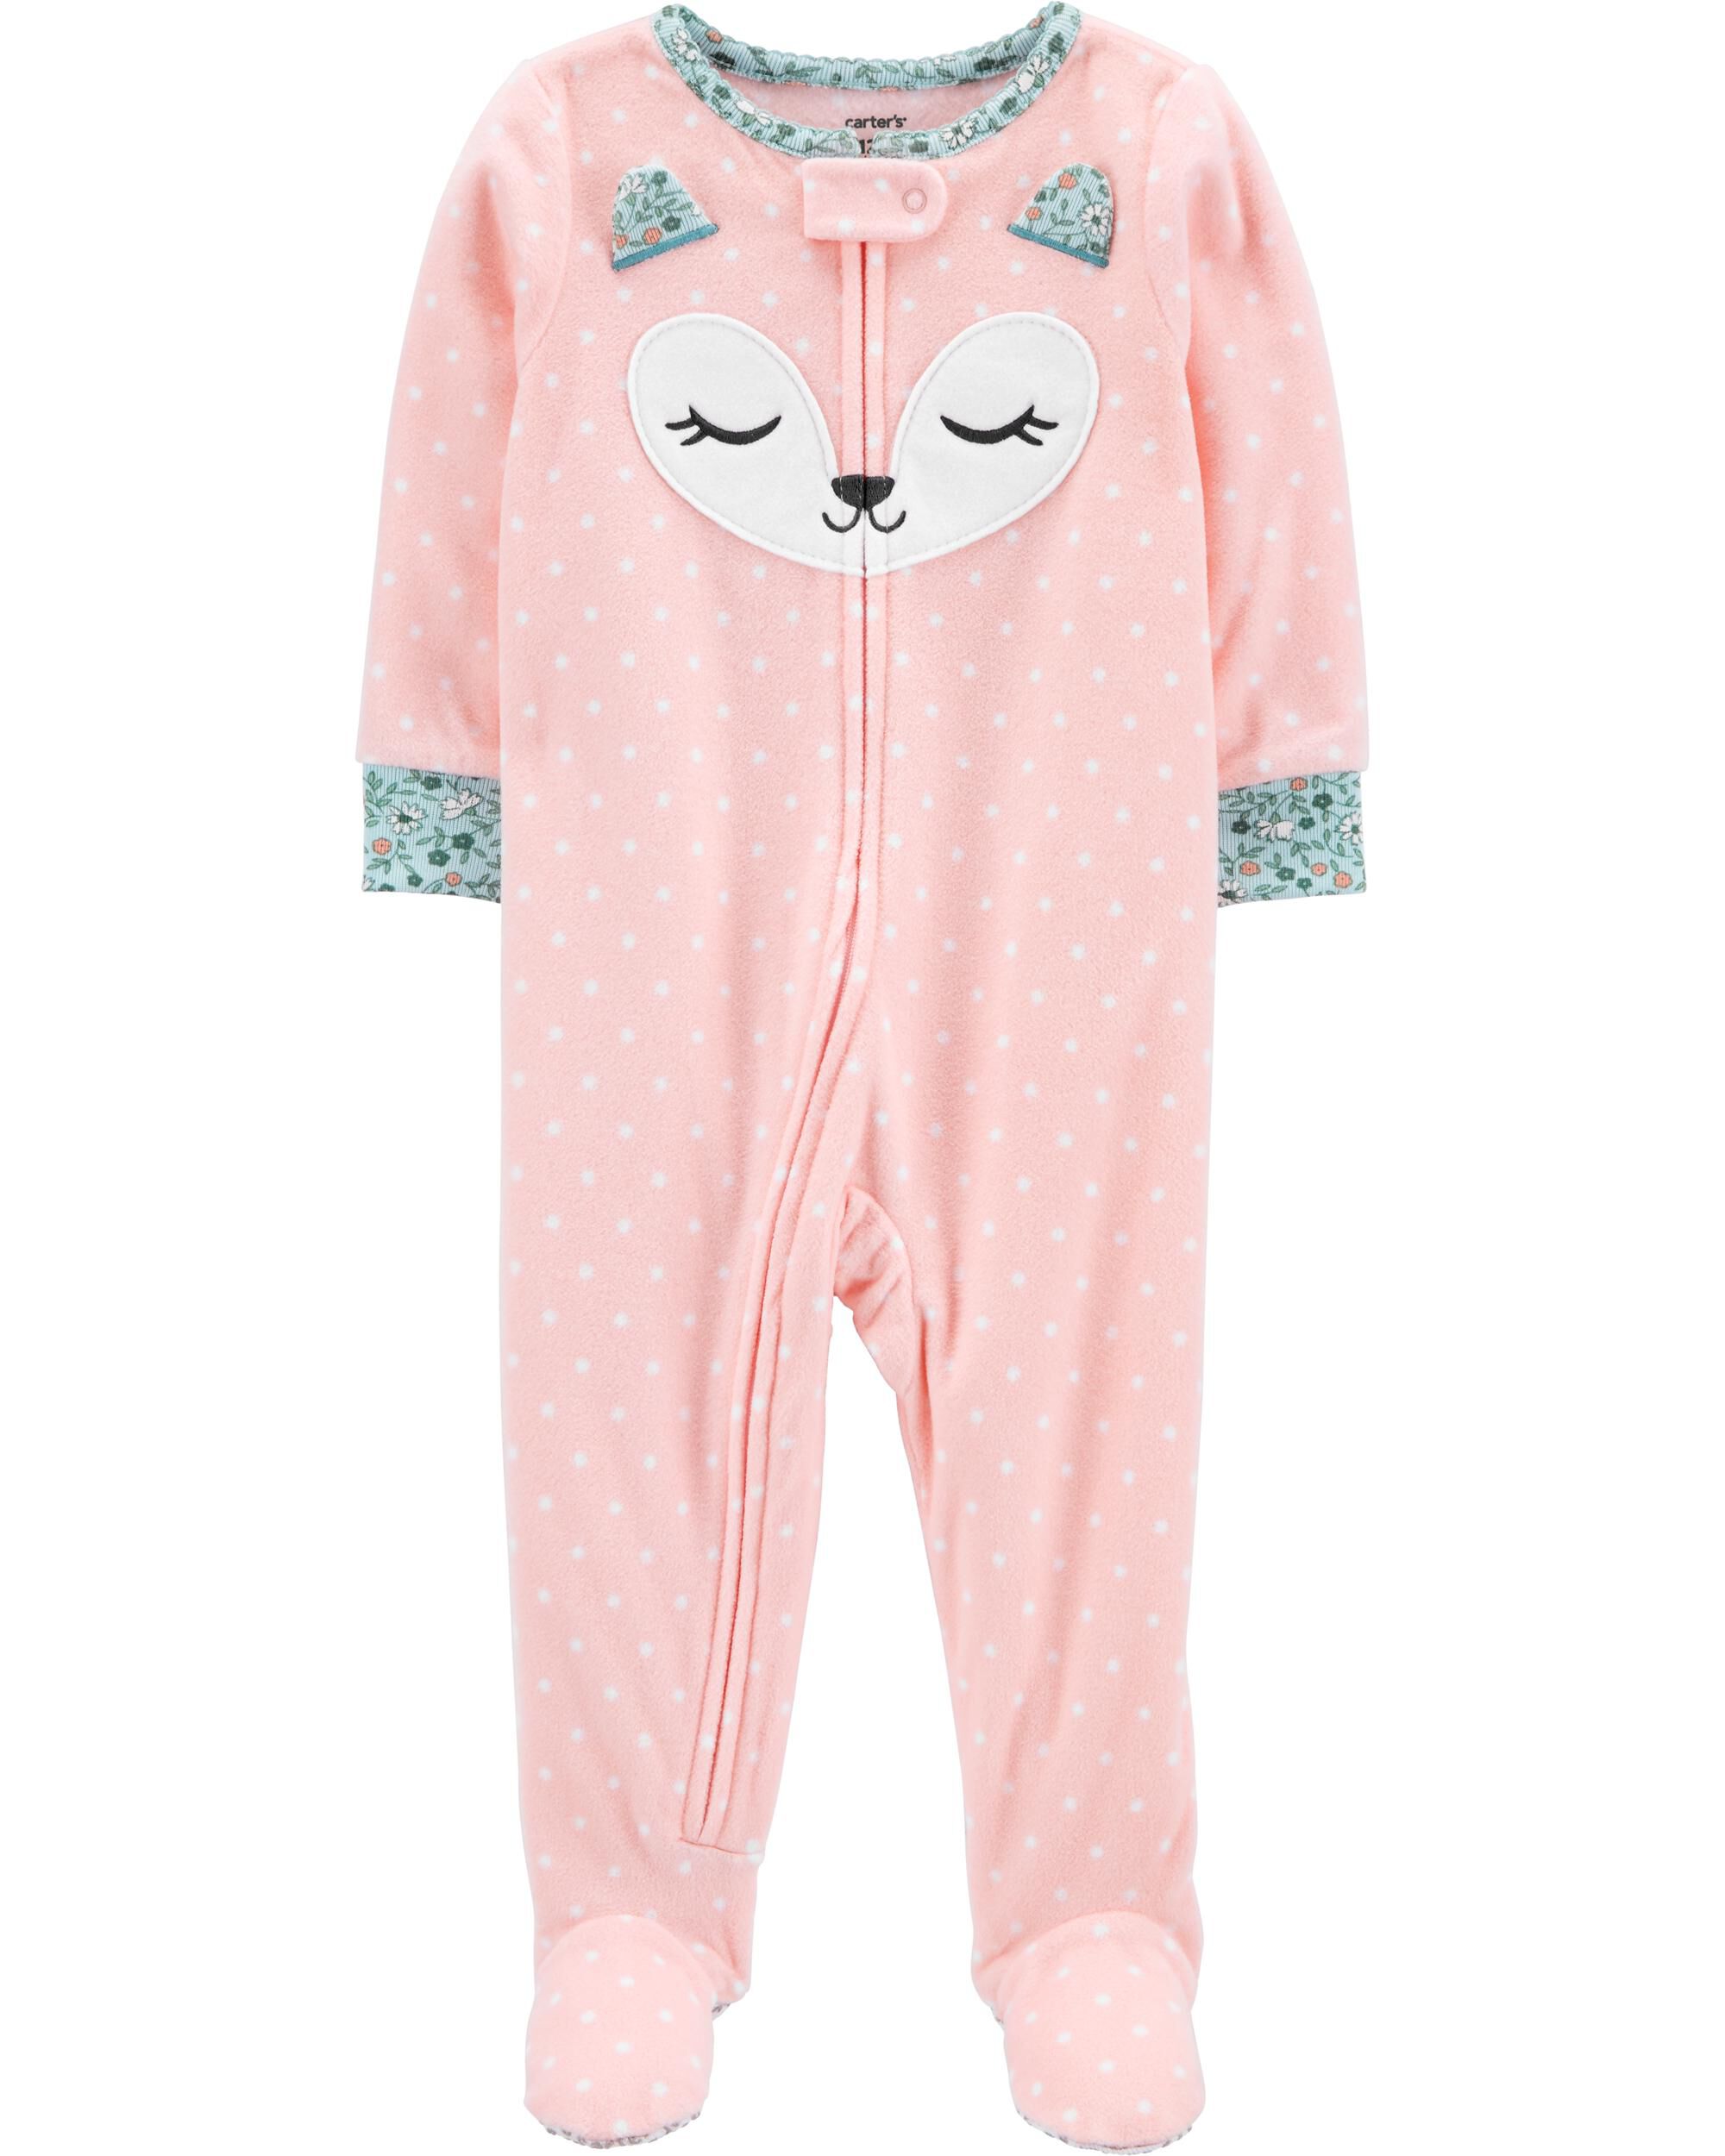 Details about   Carter's Girls 1-Pc Pink Fleece Footed Blanket Sleeper Pajamas Santa Christmas 